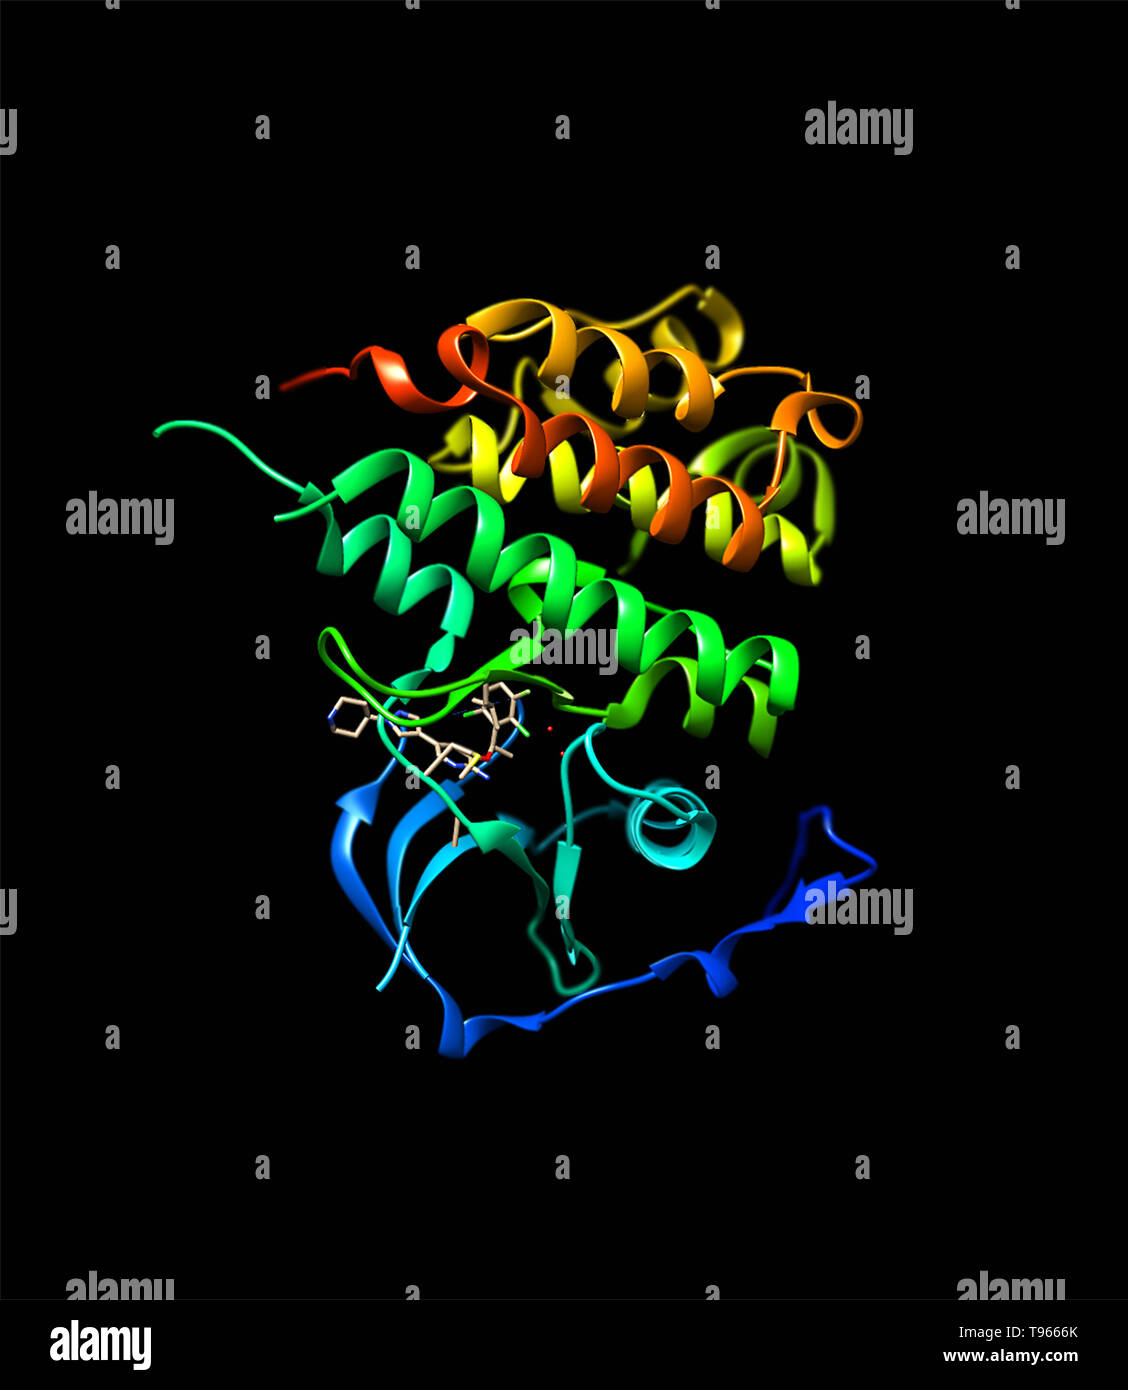 3d Illustration of Anaplastic Lymphoma Kinase with Crizotinib. Stock Photo